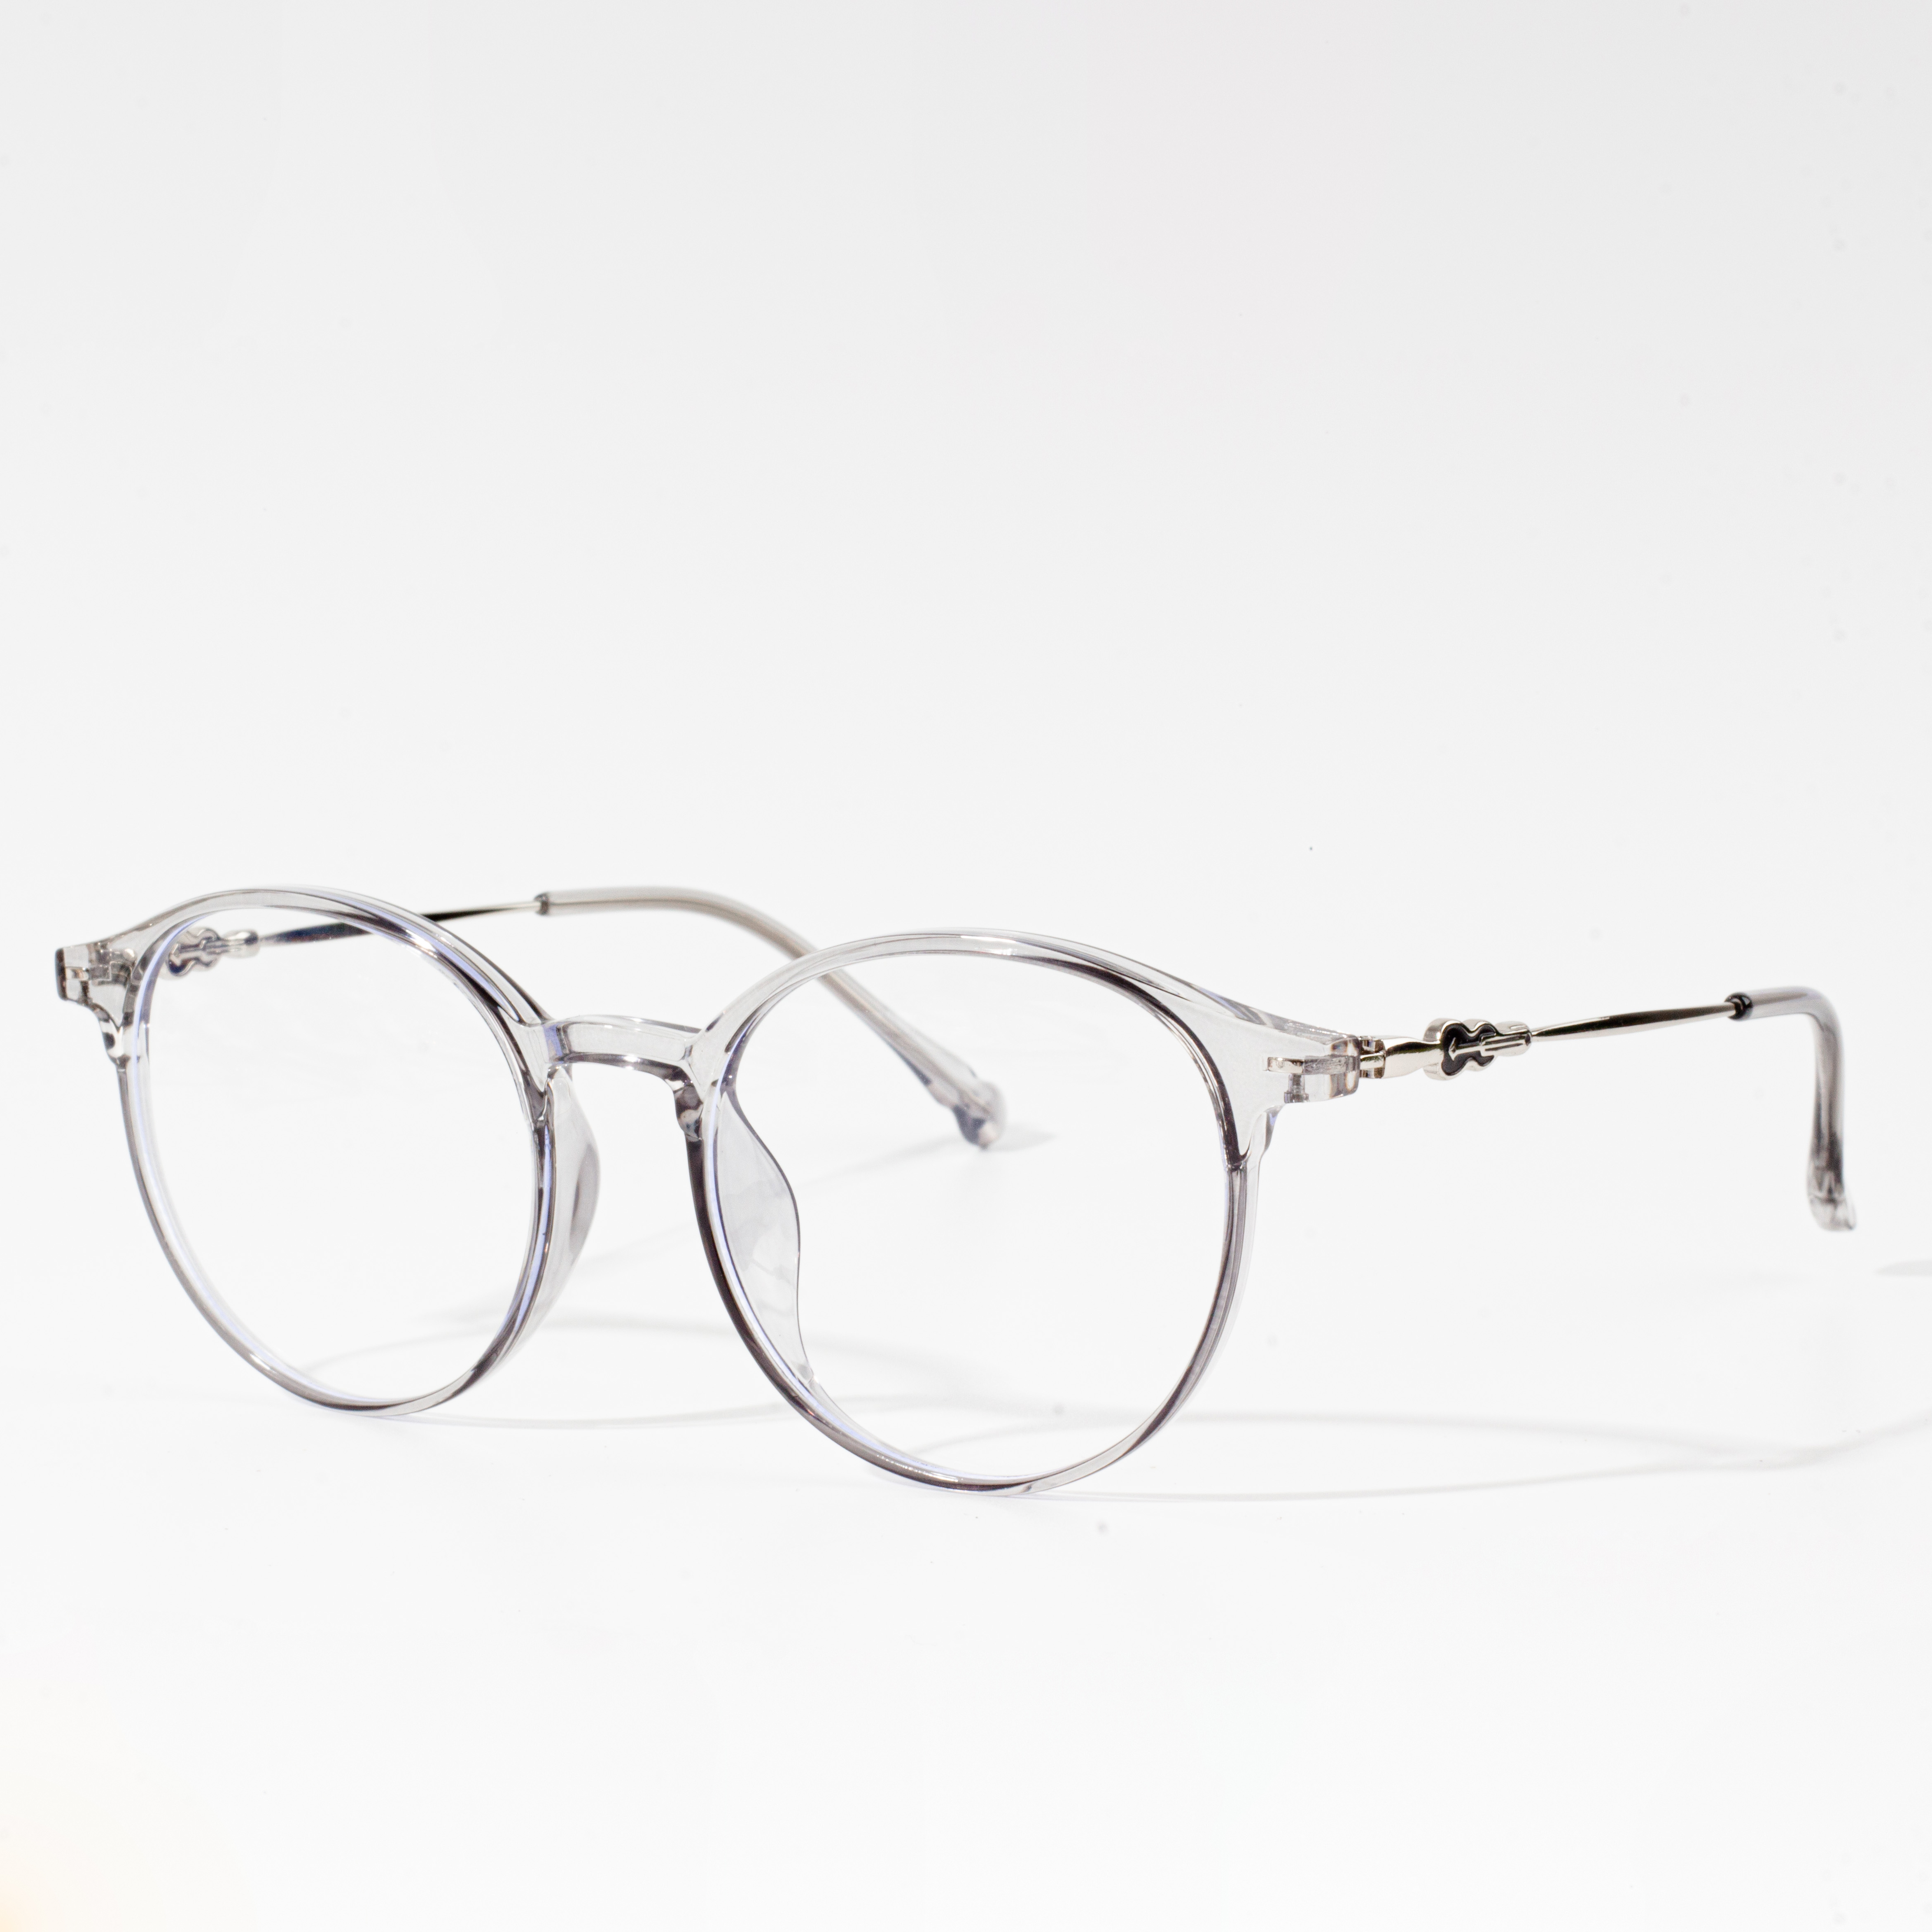 Abagore retro eyeglass frame